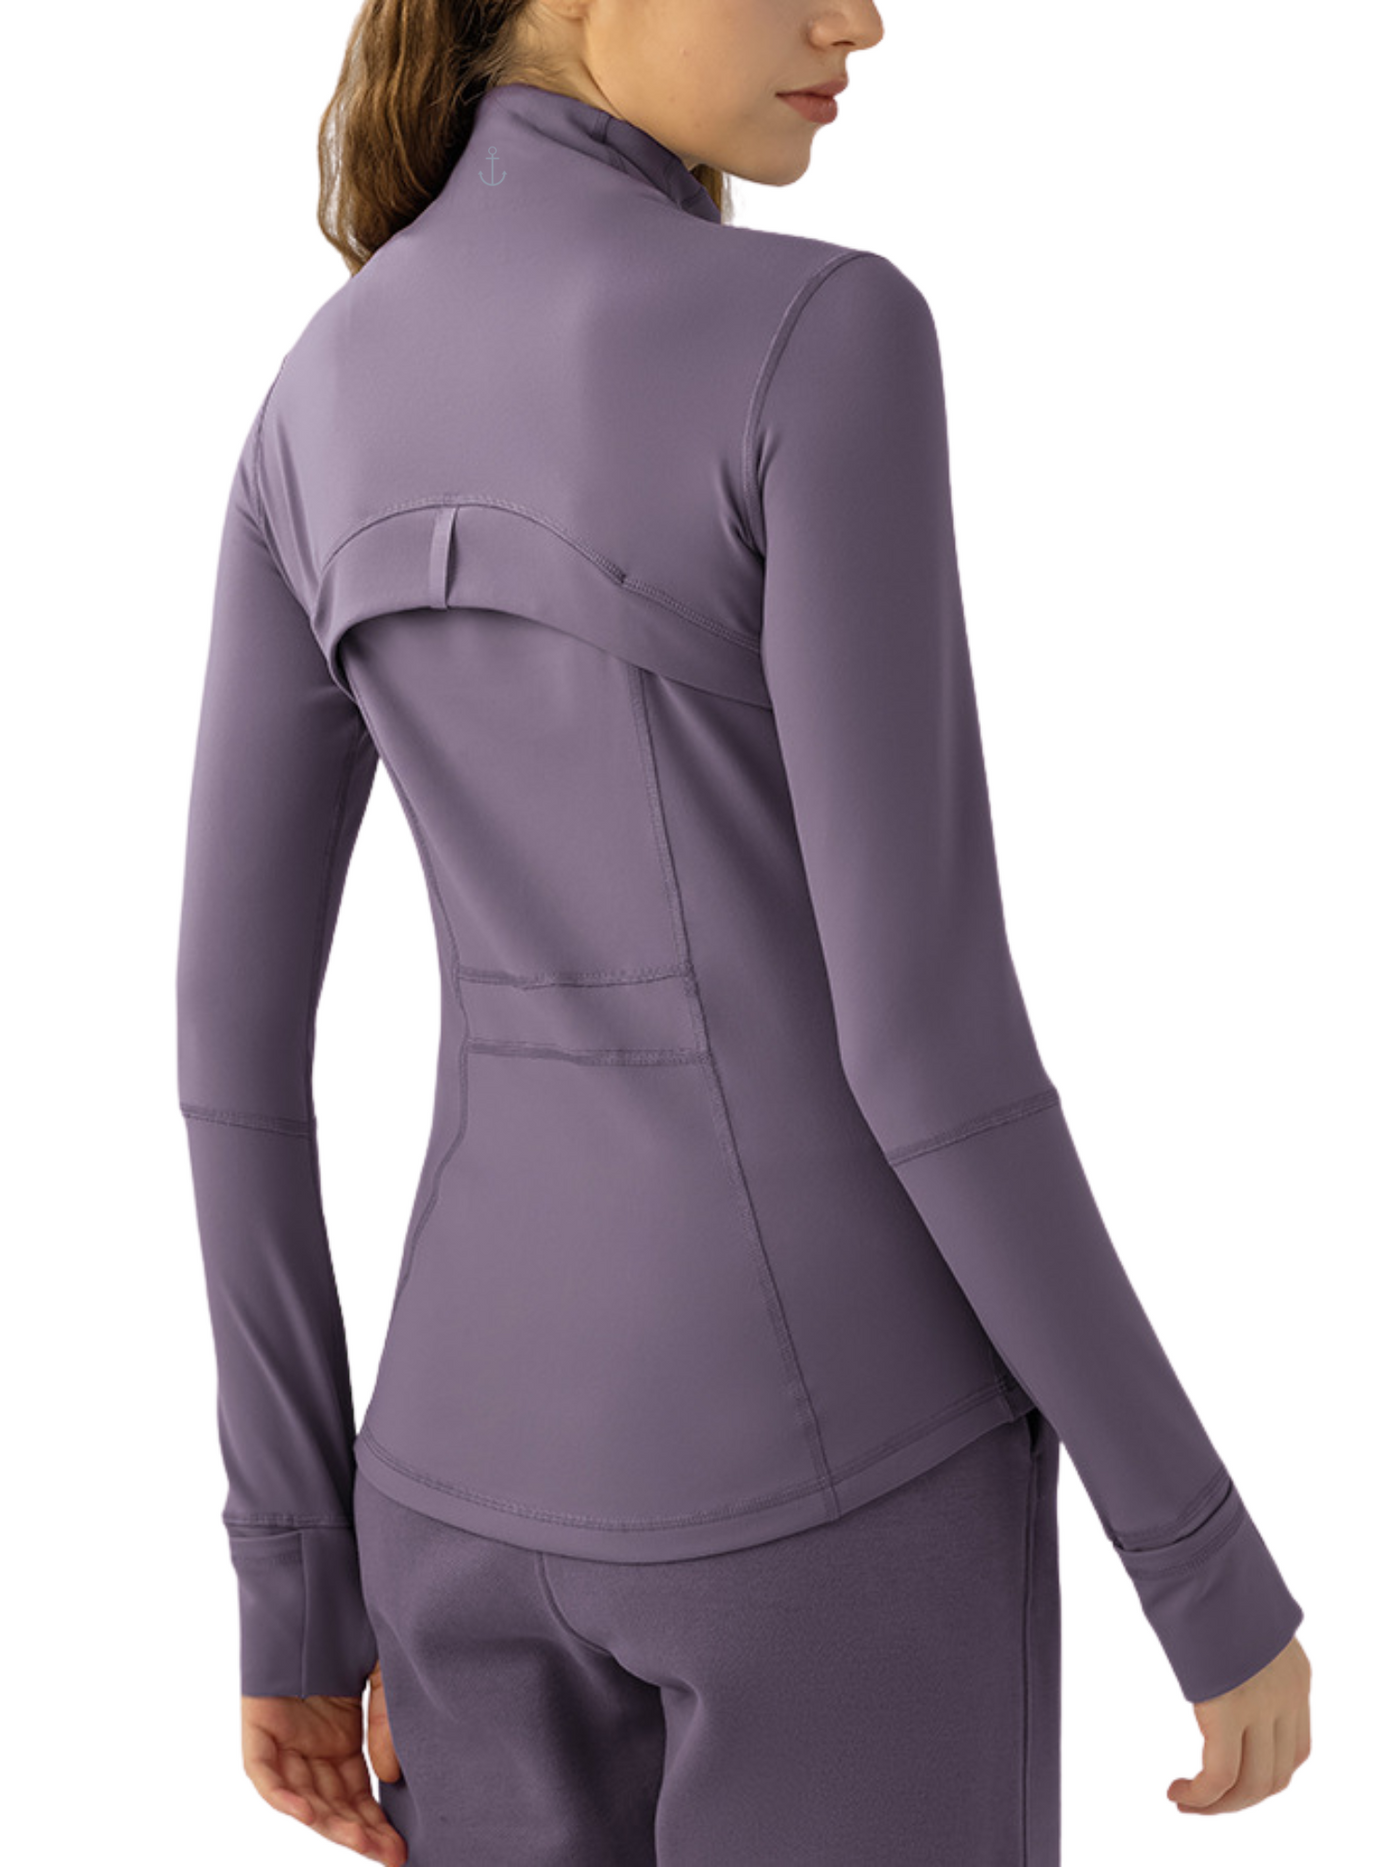 Navalora Fit Full Zip Active Jacket Define Jacket Dupe in Lavender Back View